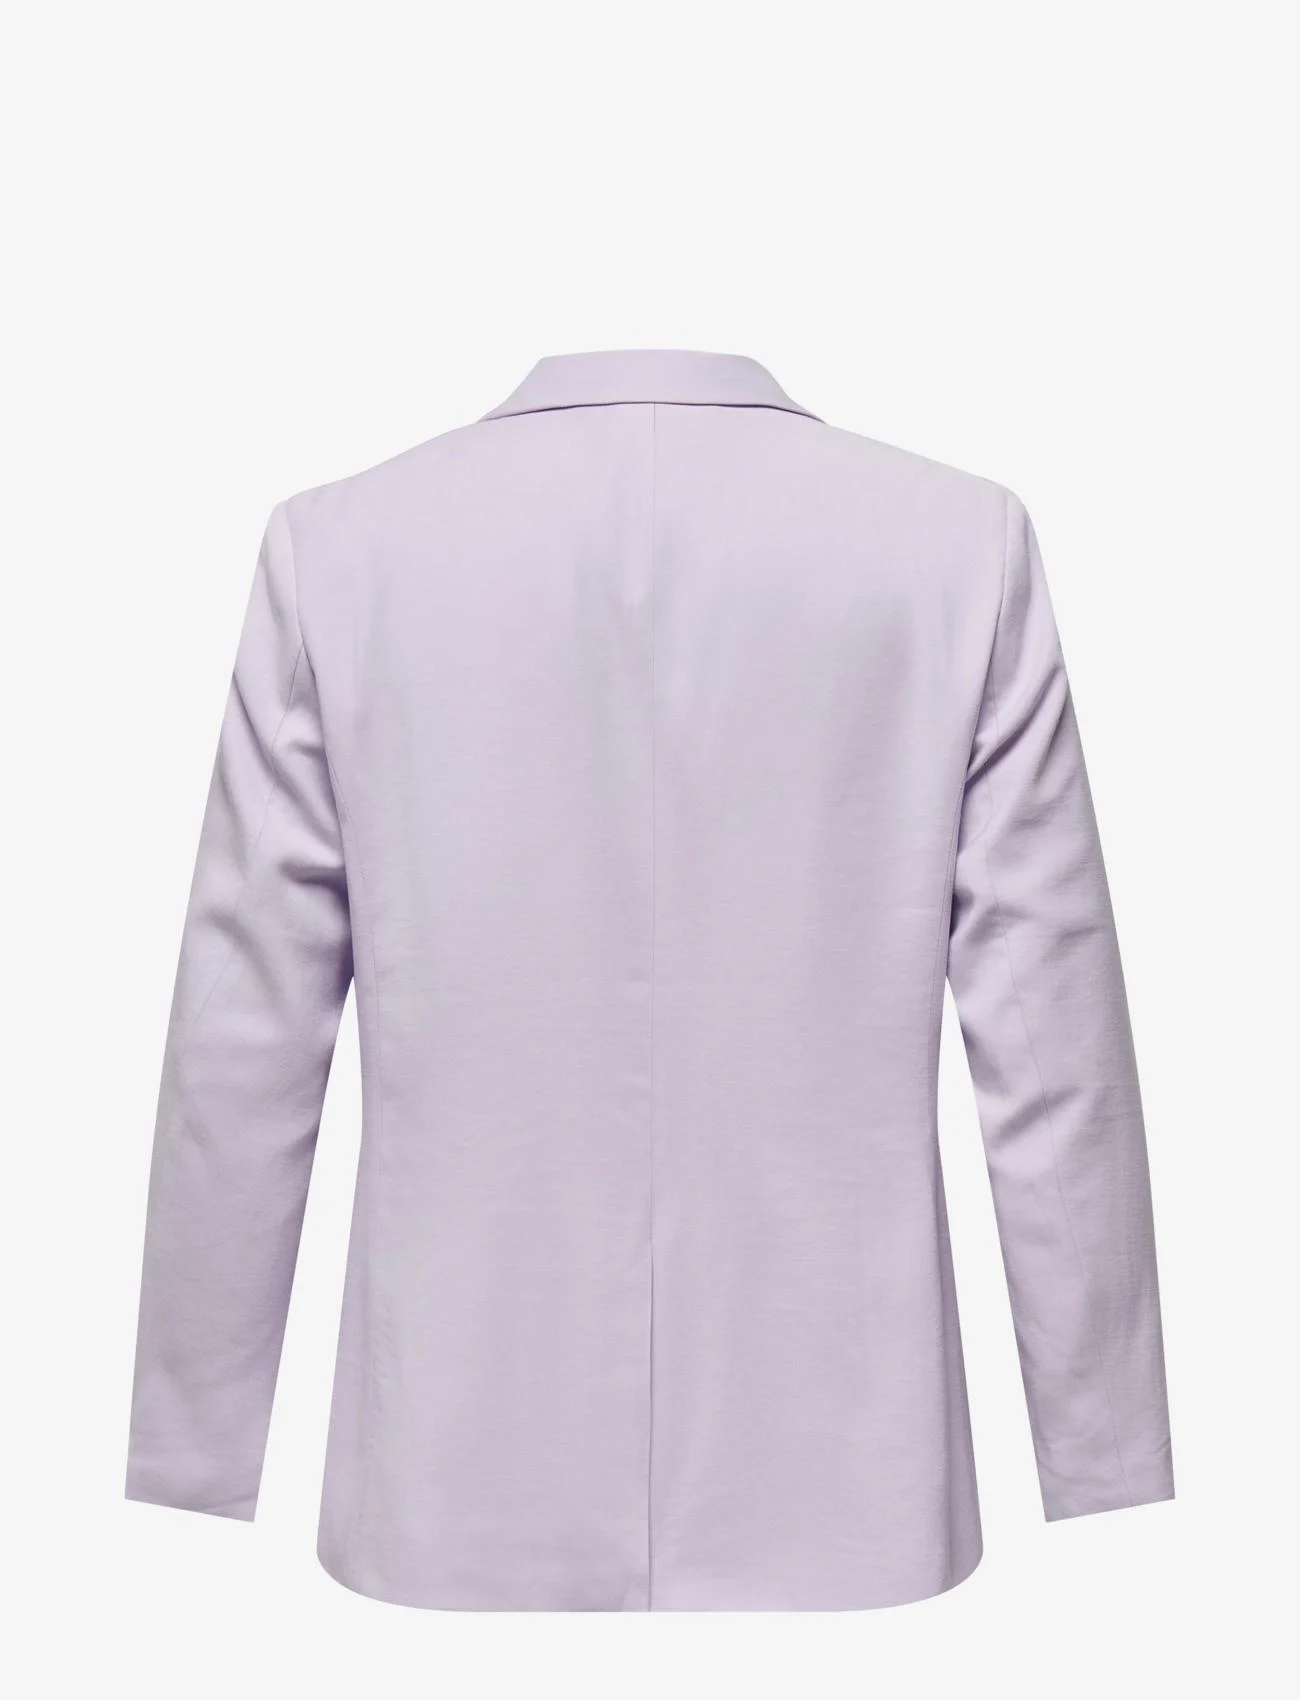 ONLY Carmakoma - CARSELMA-ARIS LIFE L/S FIT BLAZER  TLR - feestelijke kleding voor outlet-prijzen - pastel lilac - 1